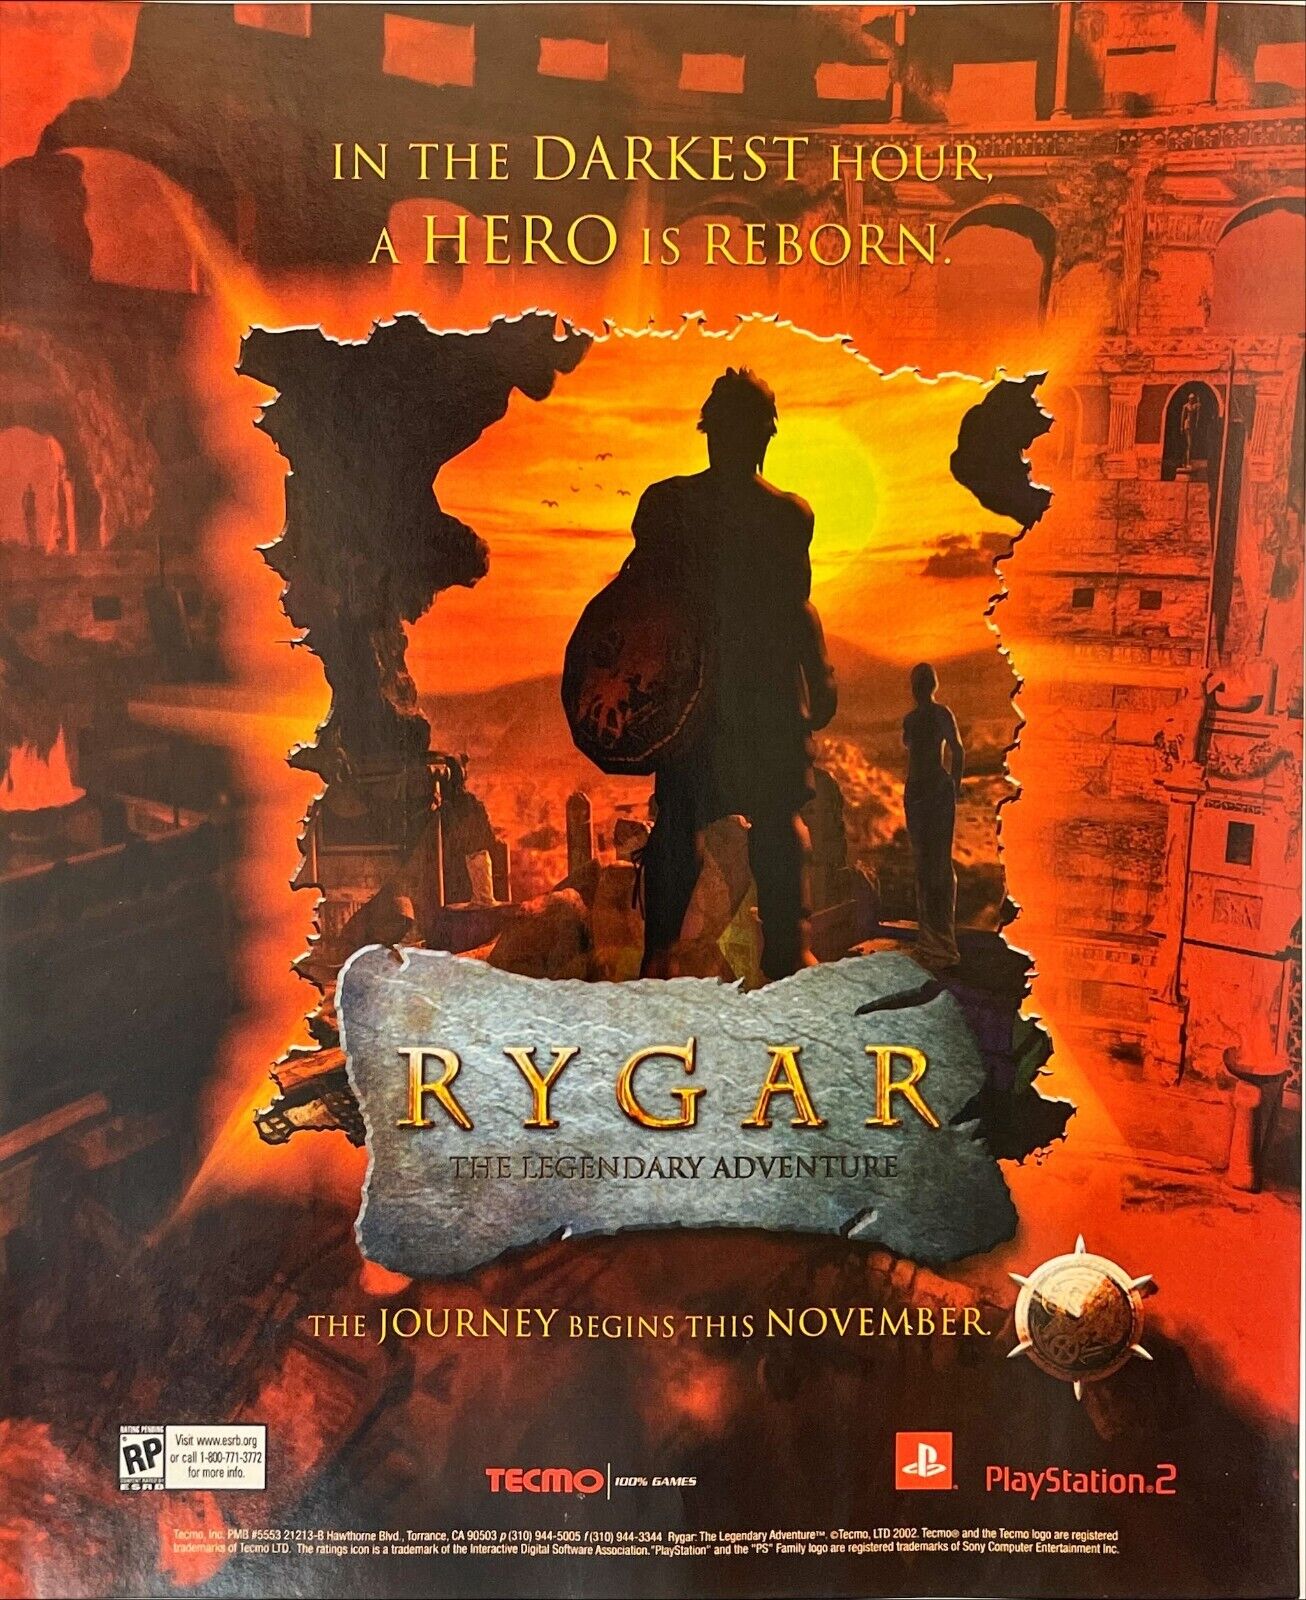 Rygar Video Game Magazine Print Ad PlayStation The Darkest Hour A Hero Is Reborn